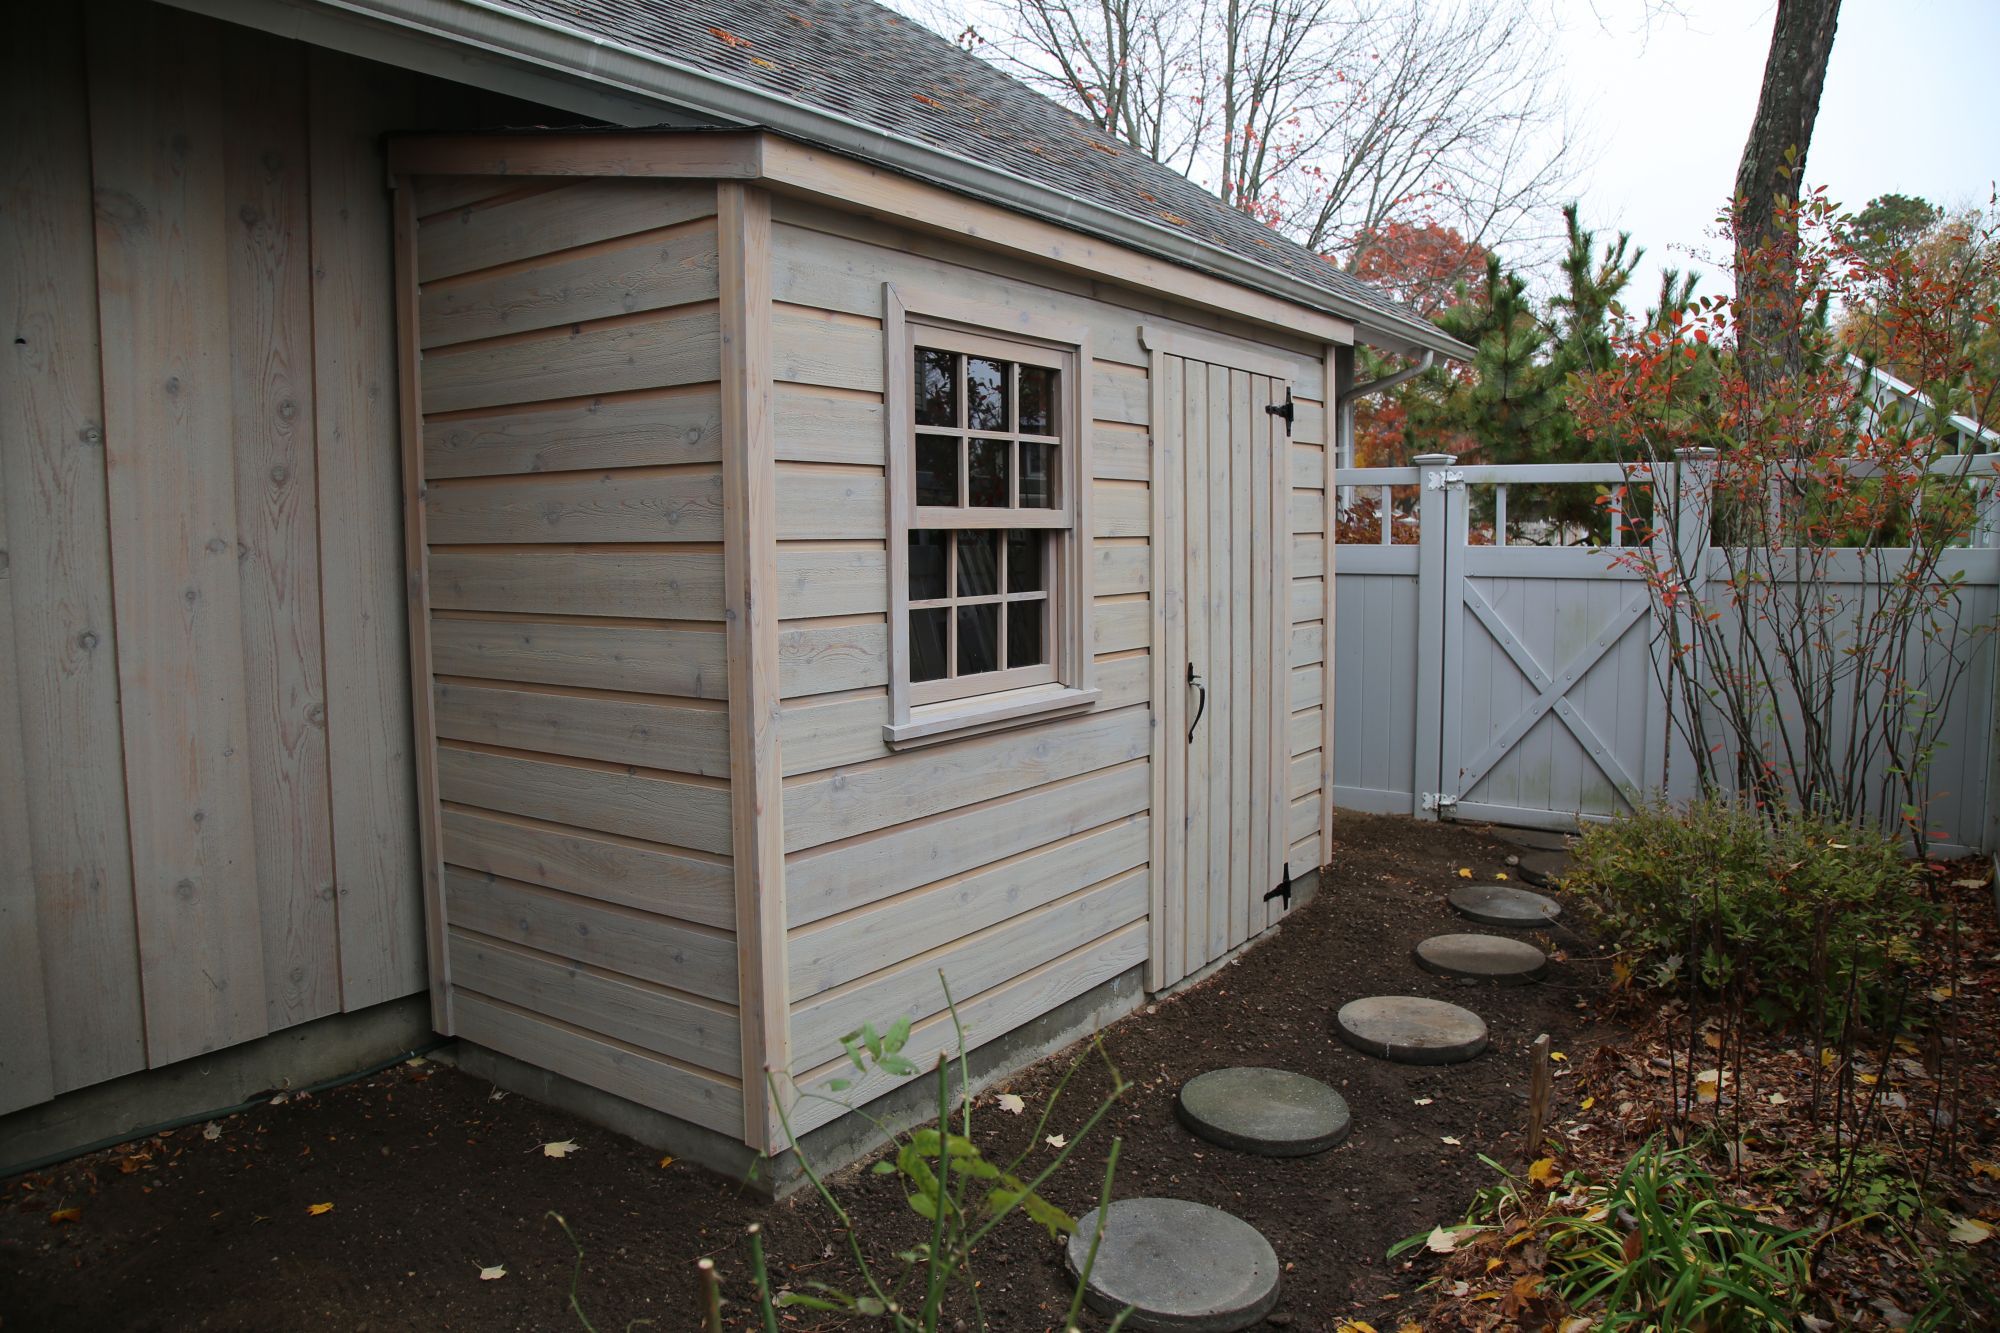 Sarawak garden shed 4x10 with standard single door in Islip, New York. ID number 195923-1.